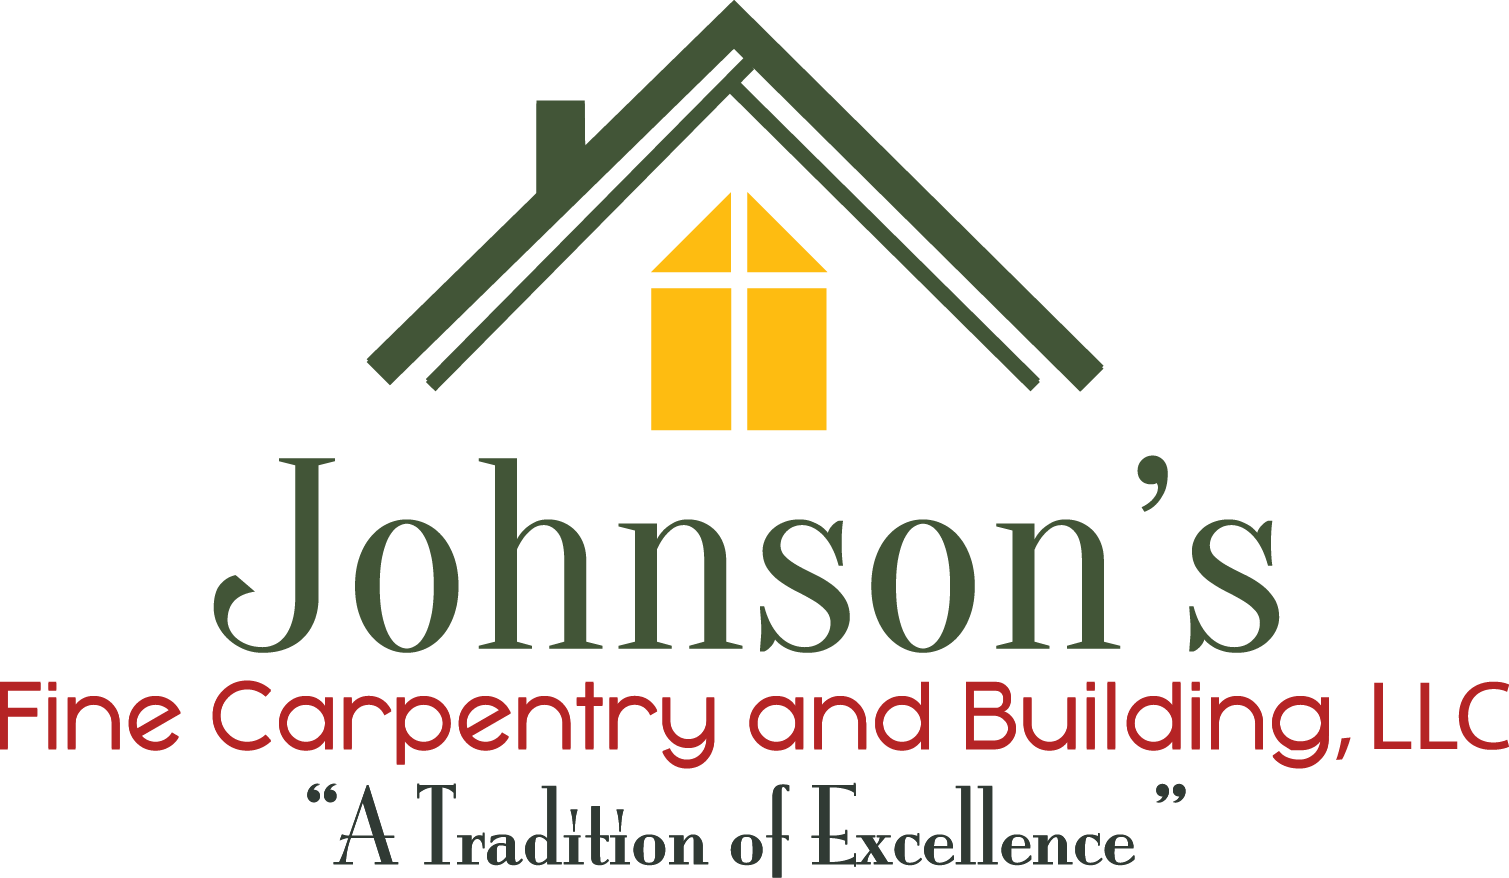 Johnsons Fine Carpentry and Building LLC | Better Business Bureau® Profile